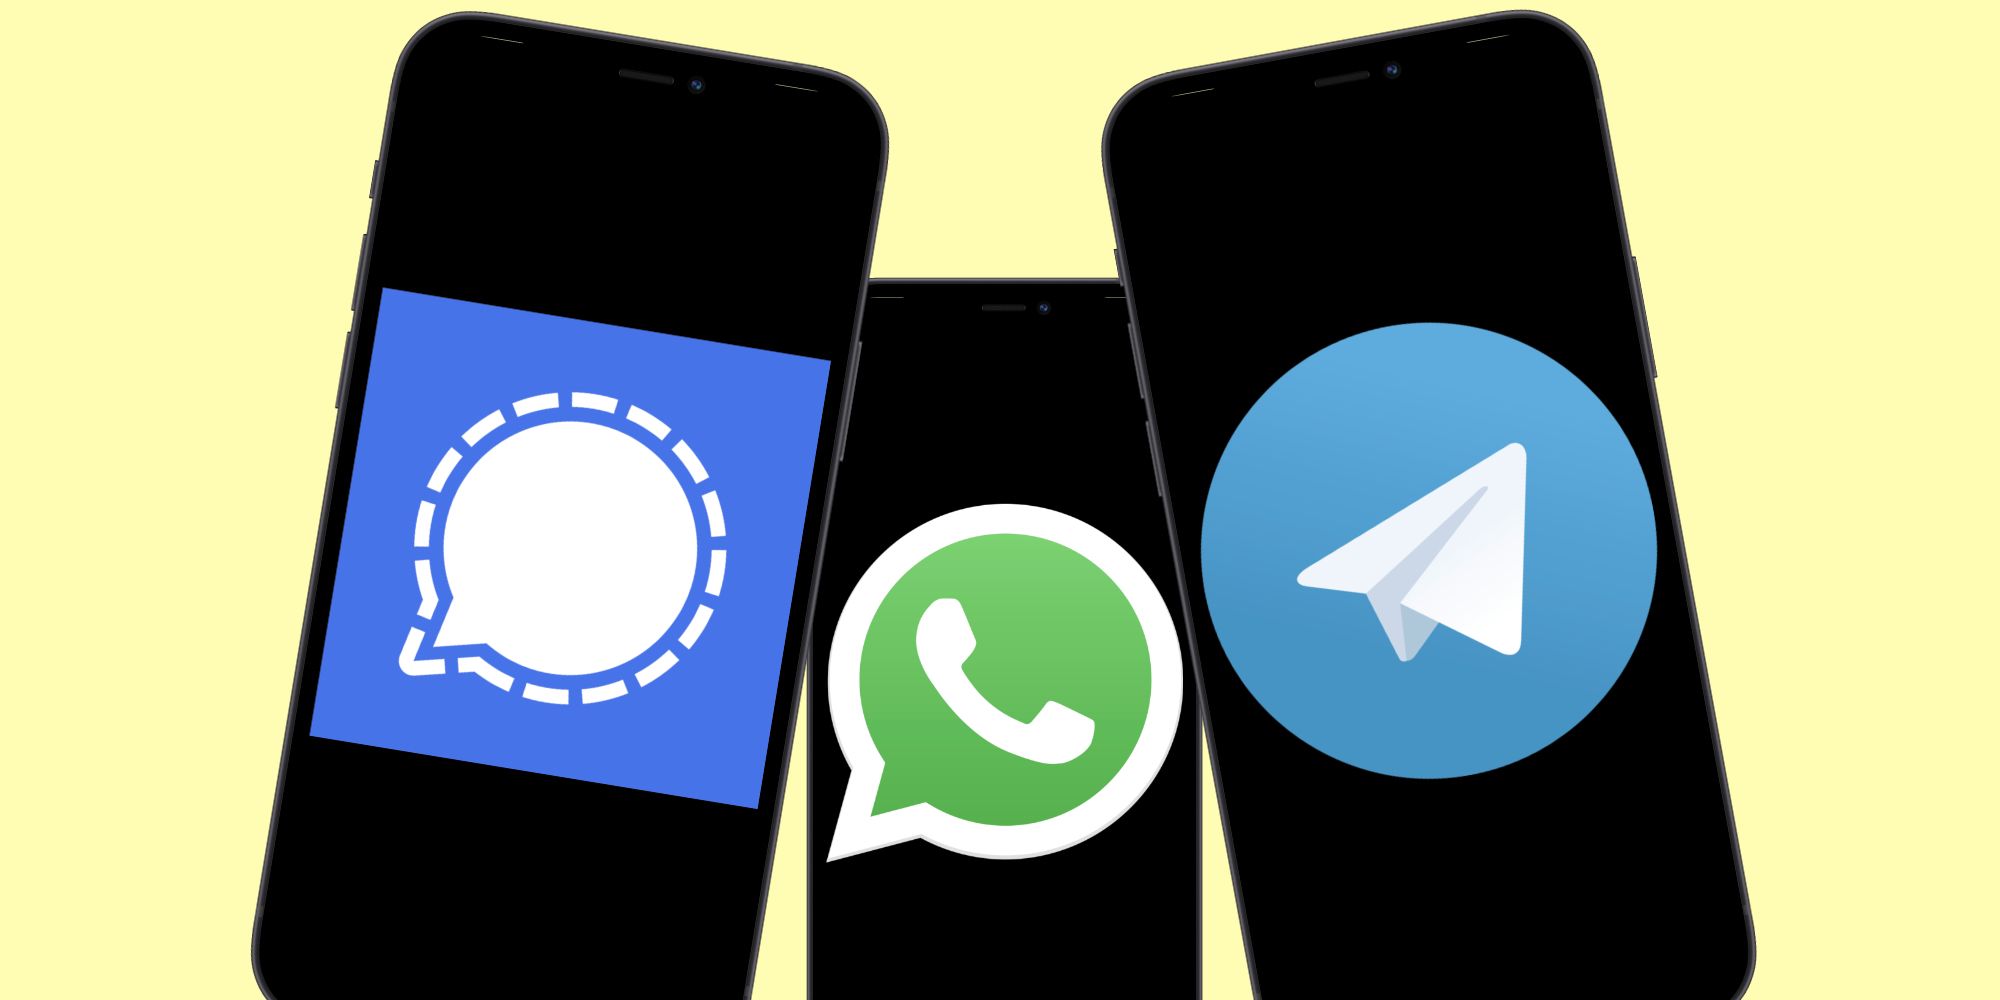 Signal, WhatsApp, and Telegram logos on iPhones